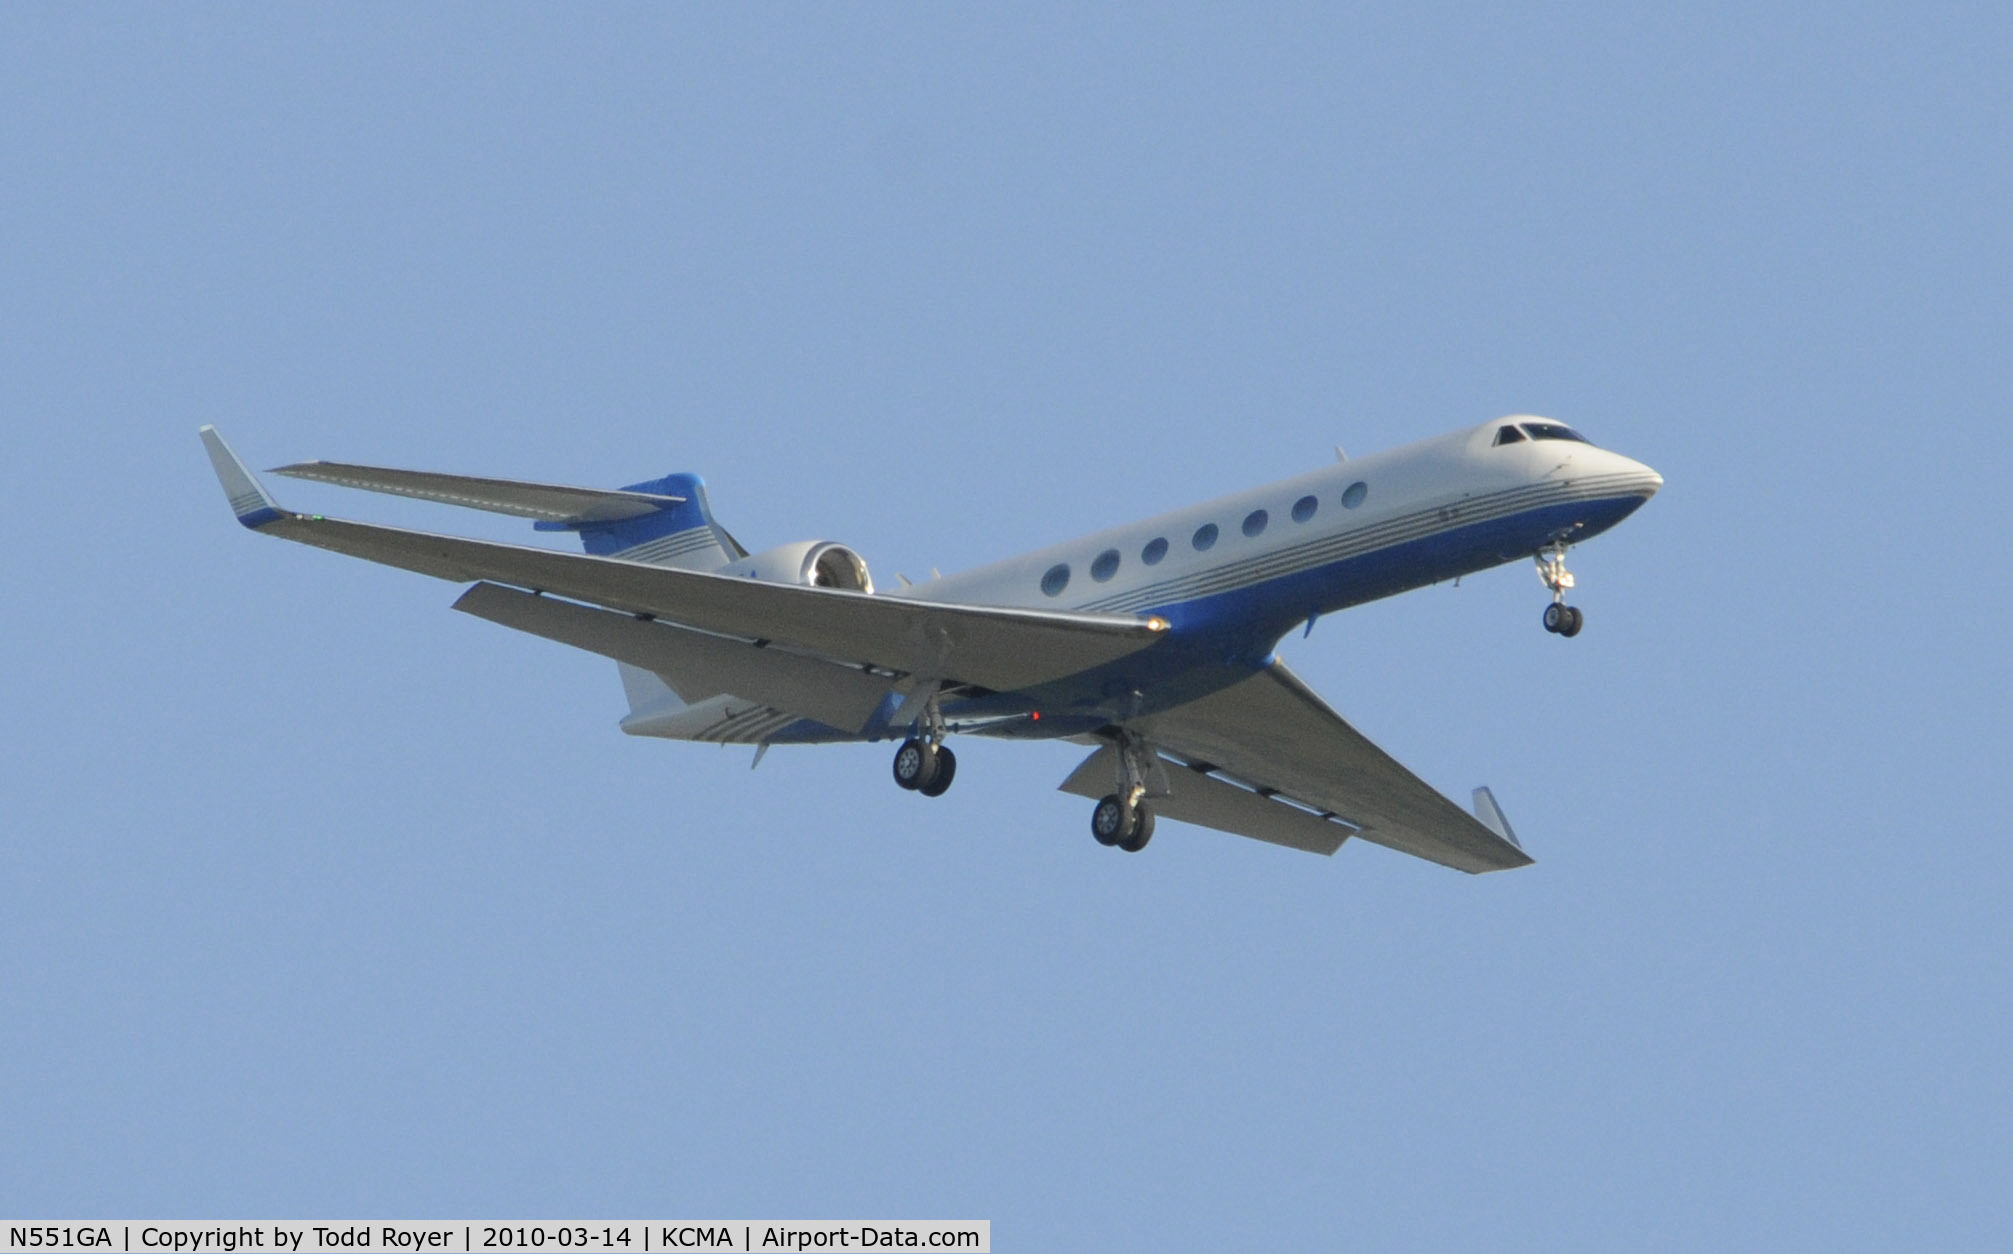 N551GA, 2000 Gulfstream Aerospace G-V C/N 606, From the backyard